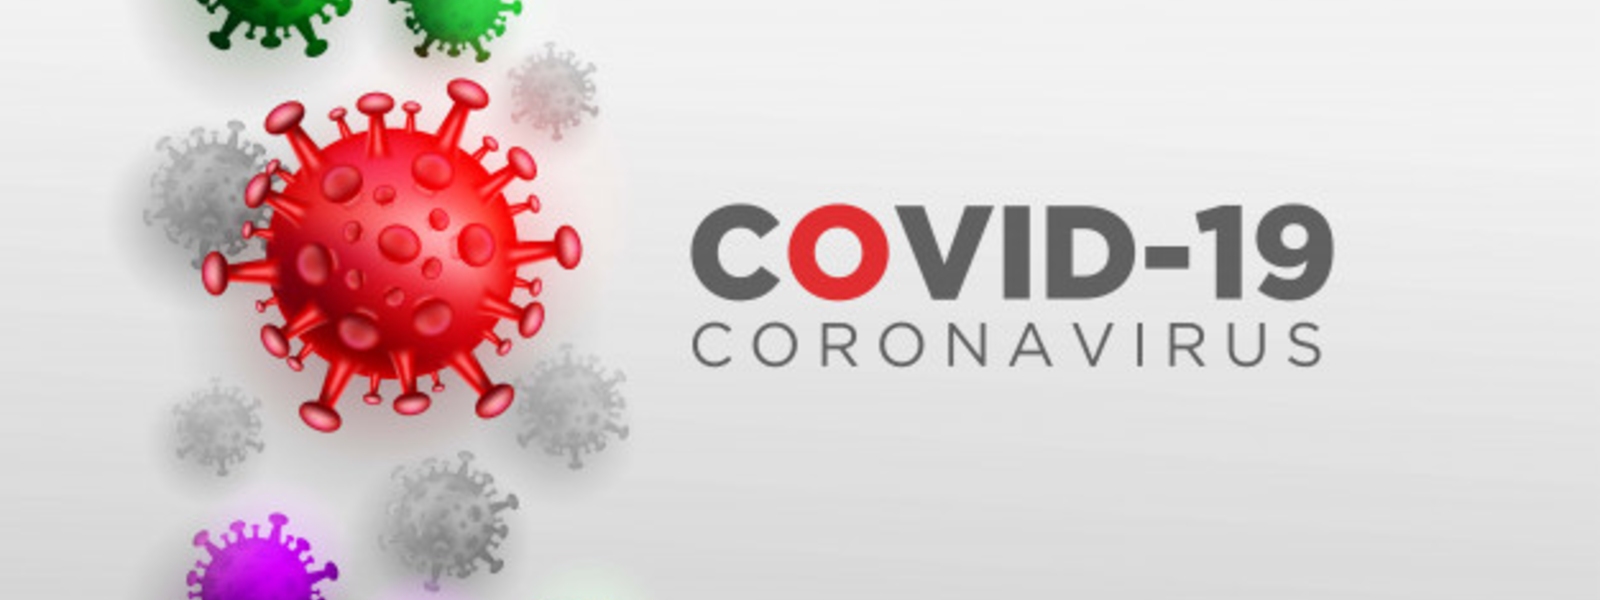 COVID pneumonia cause of death of 02 fatalities on Sunday (25)